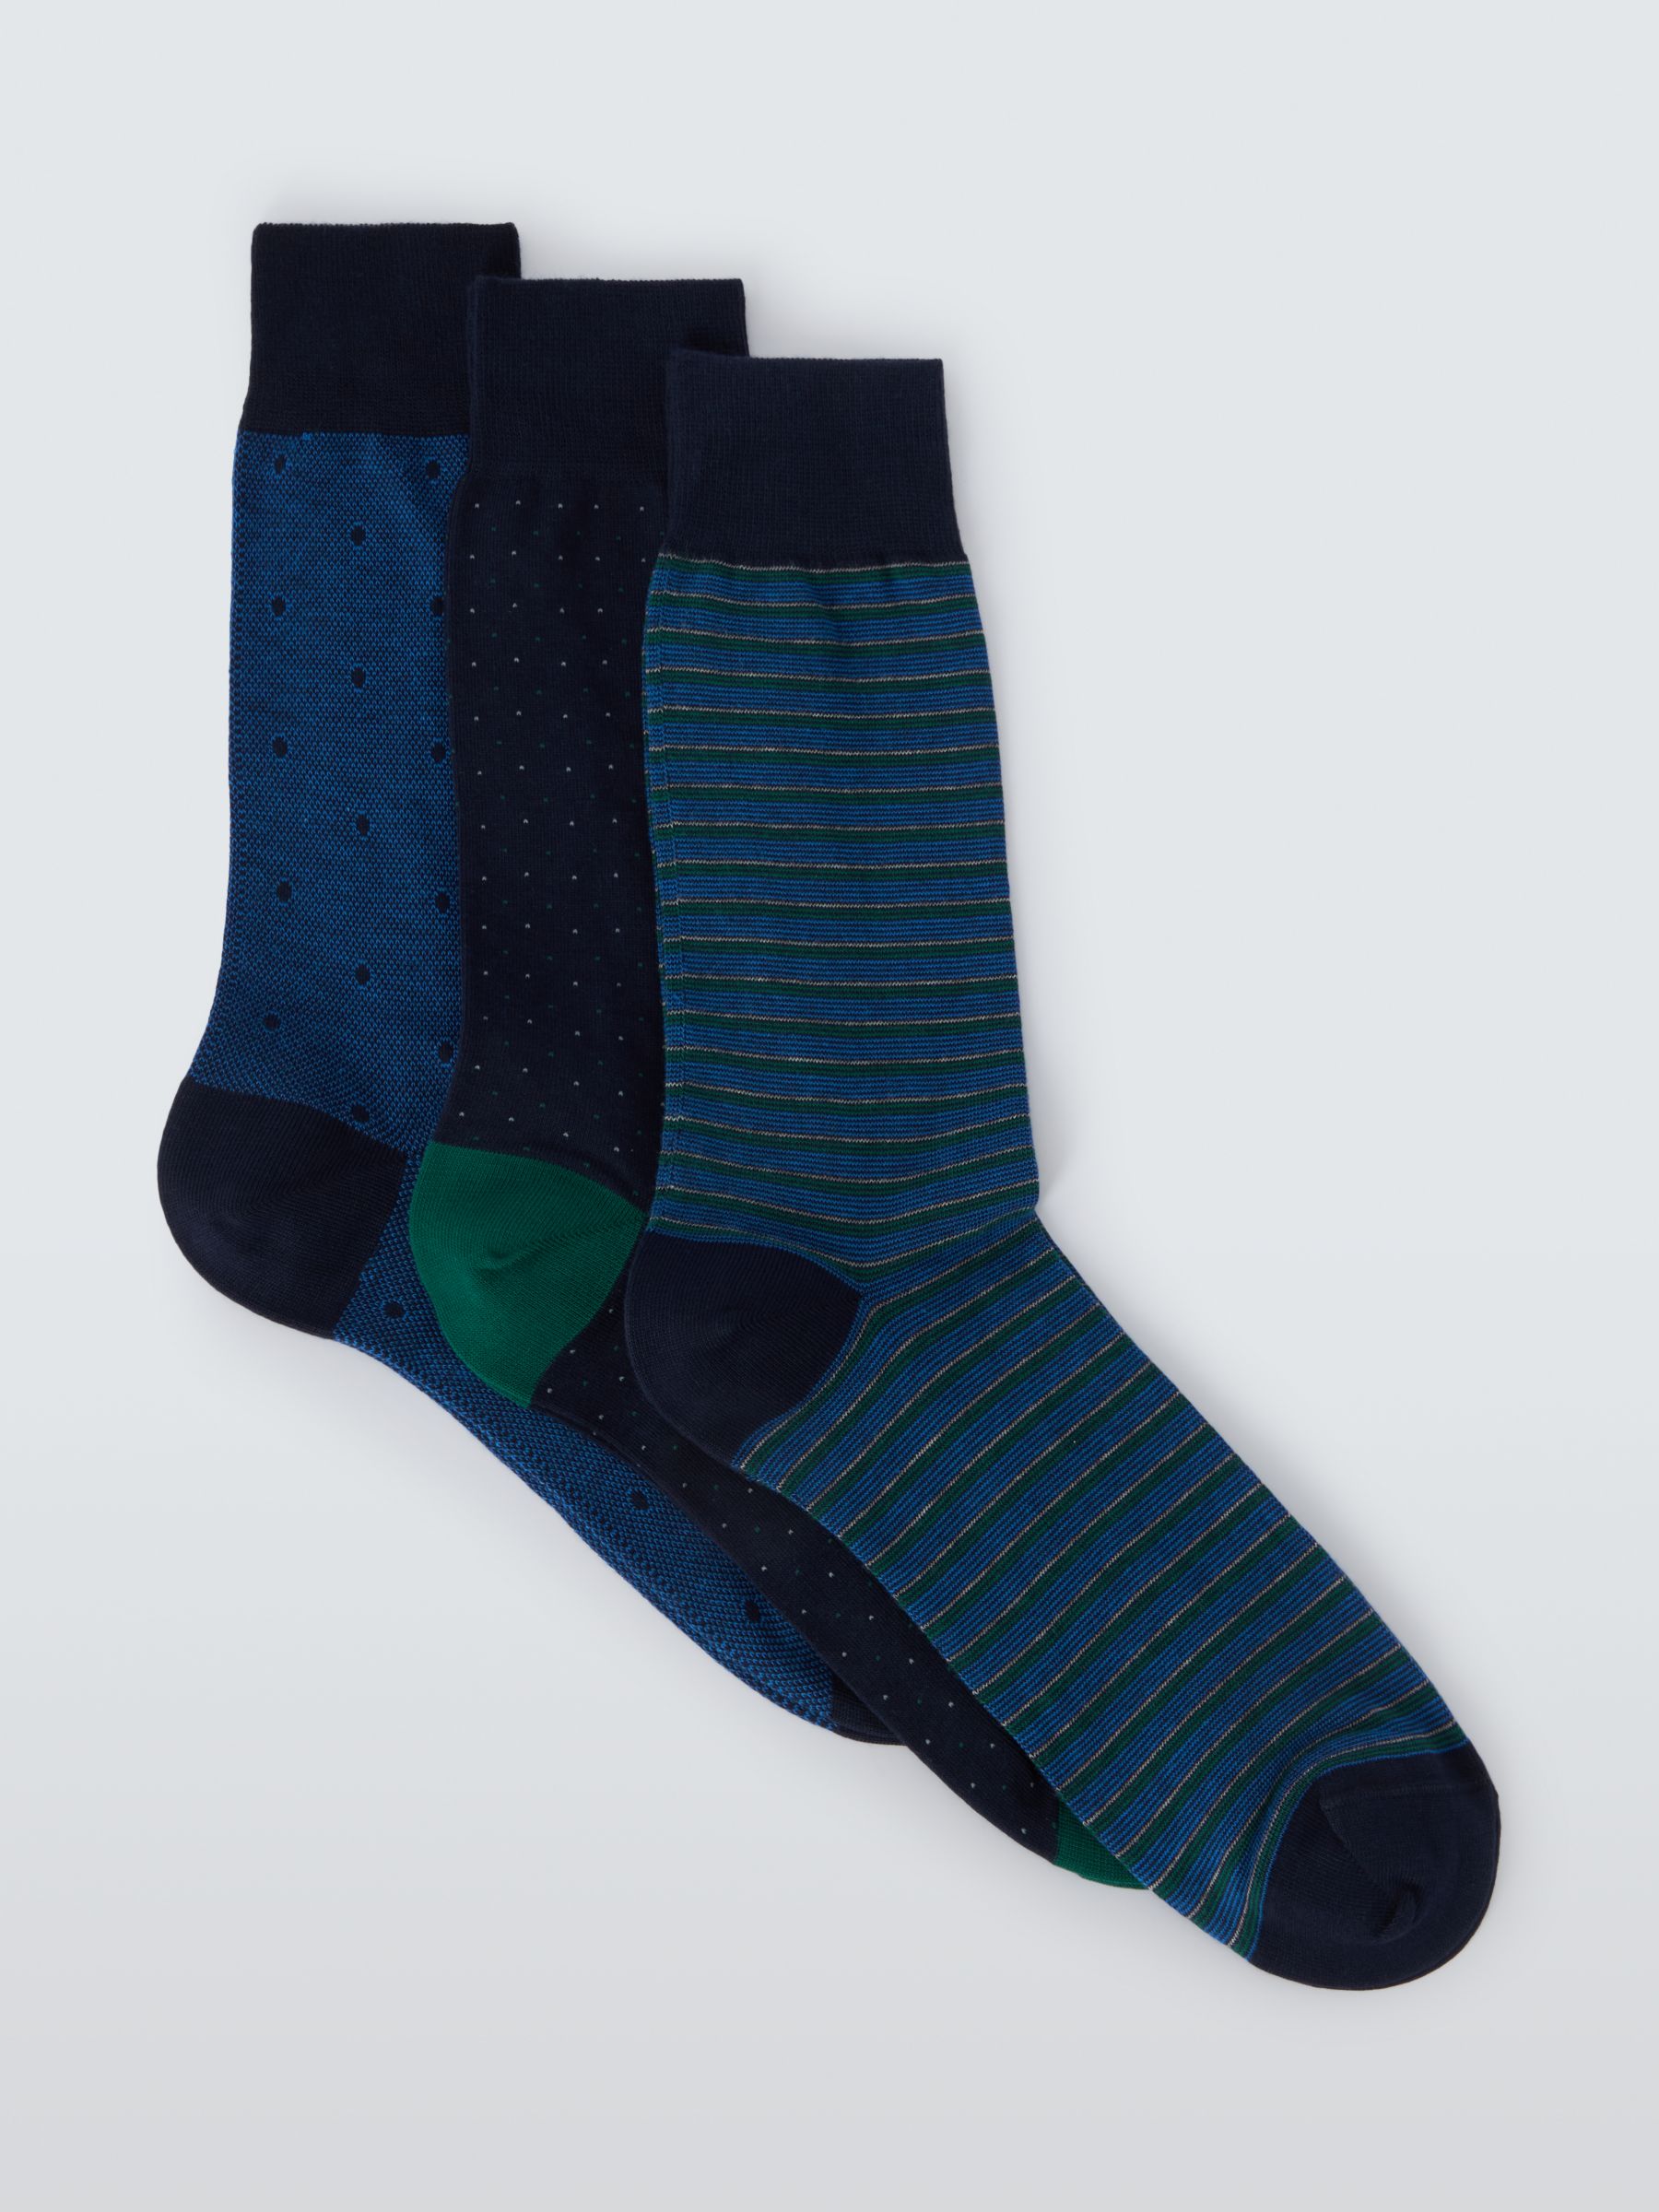 Buy John Lewis Premium Socks, Pack of 3, Multi Online at johnlewis.com